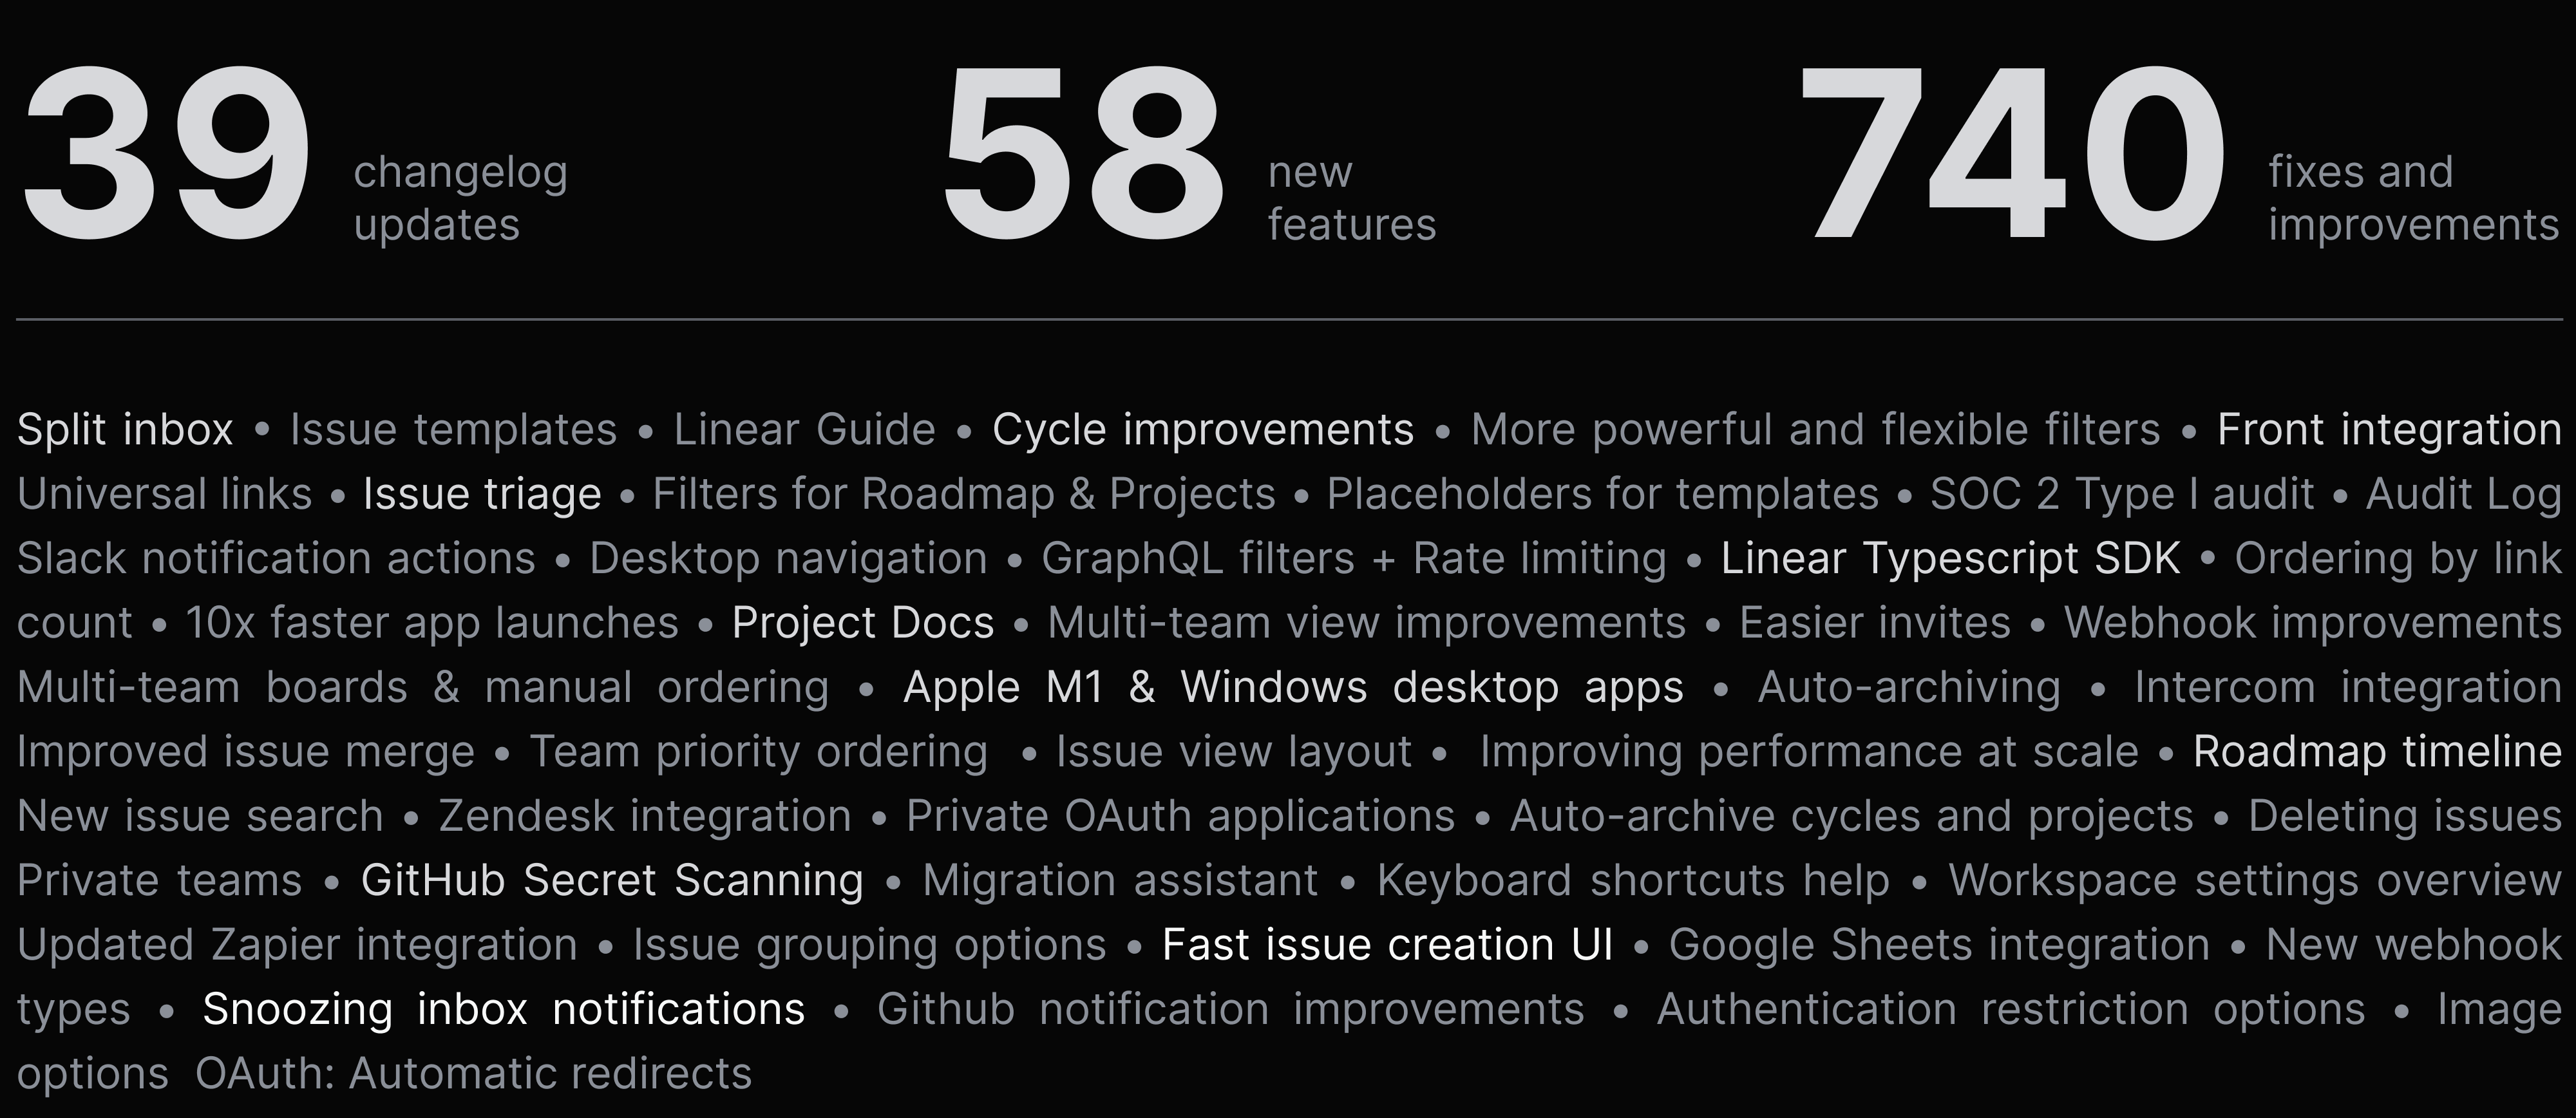 39 changelog updates, 58 new features, 740 fixes and improvements